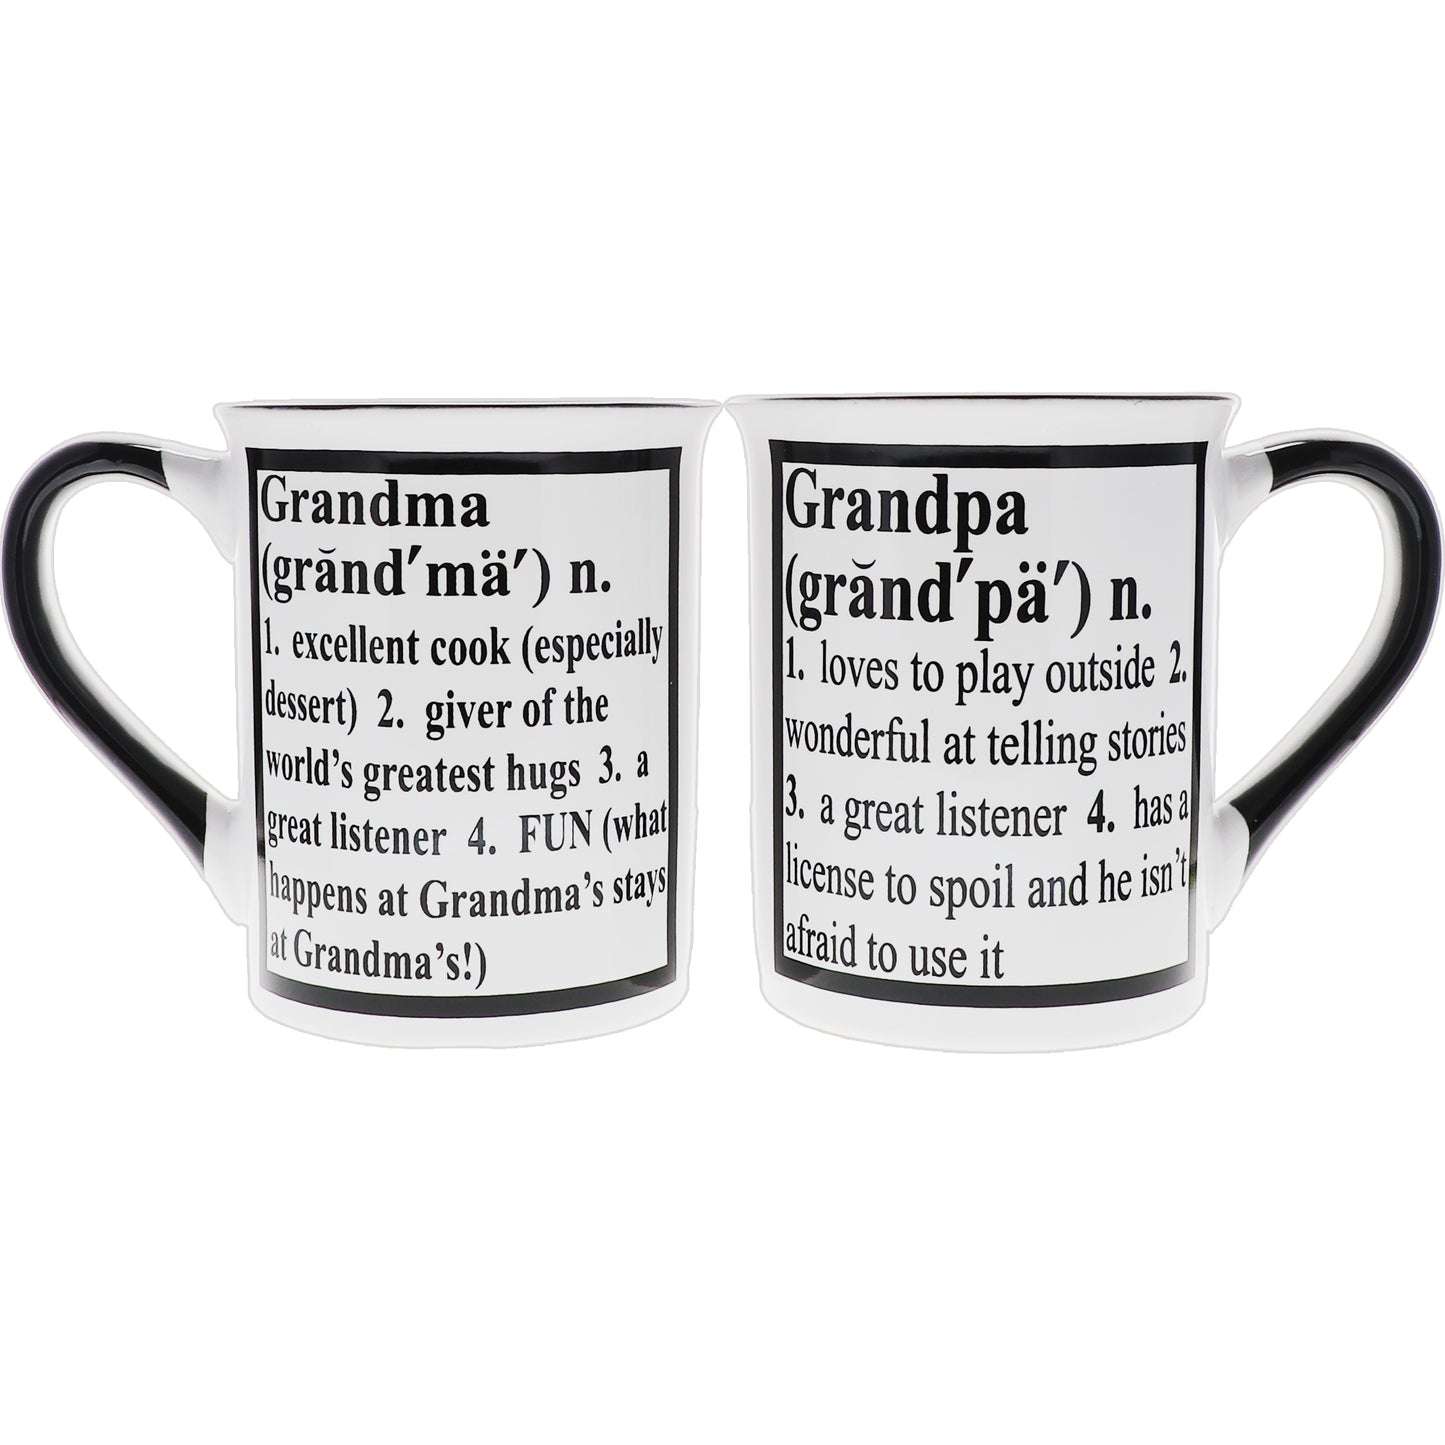 Cottage Creek Grandma Grandpa Mug Set, Two Multicolored, Ceramic, 6" Grandparent Mugs